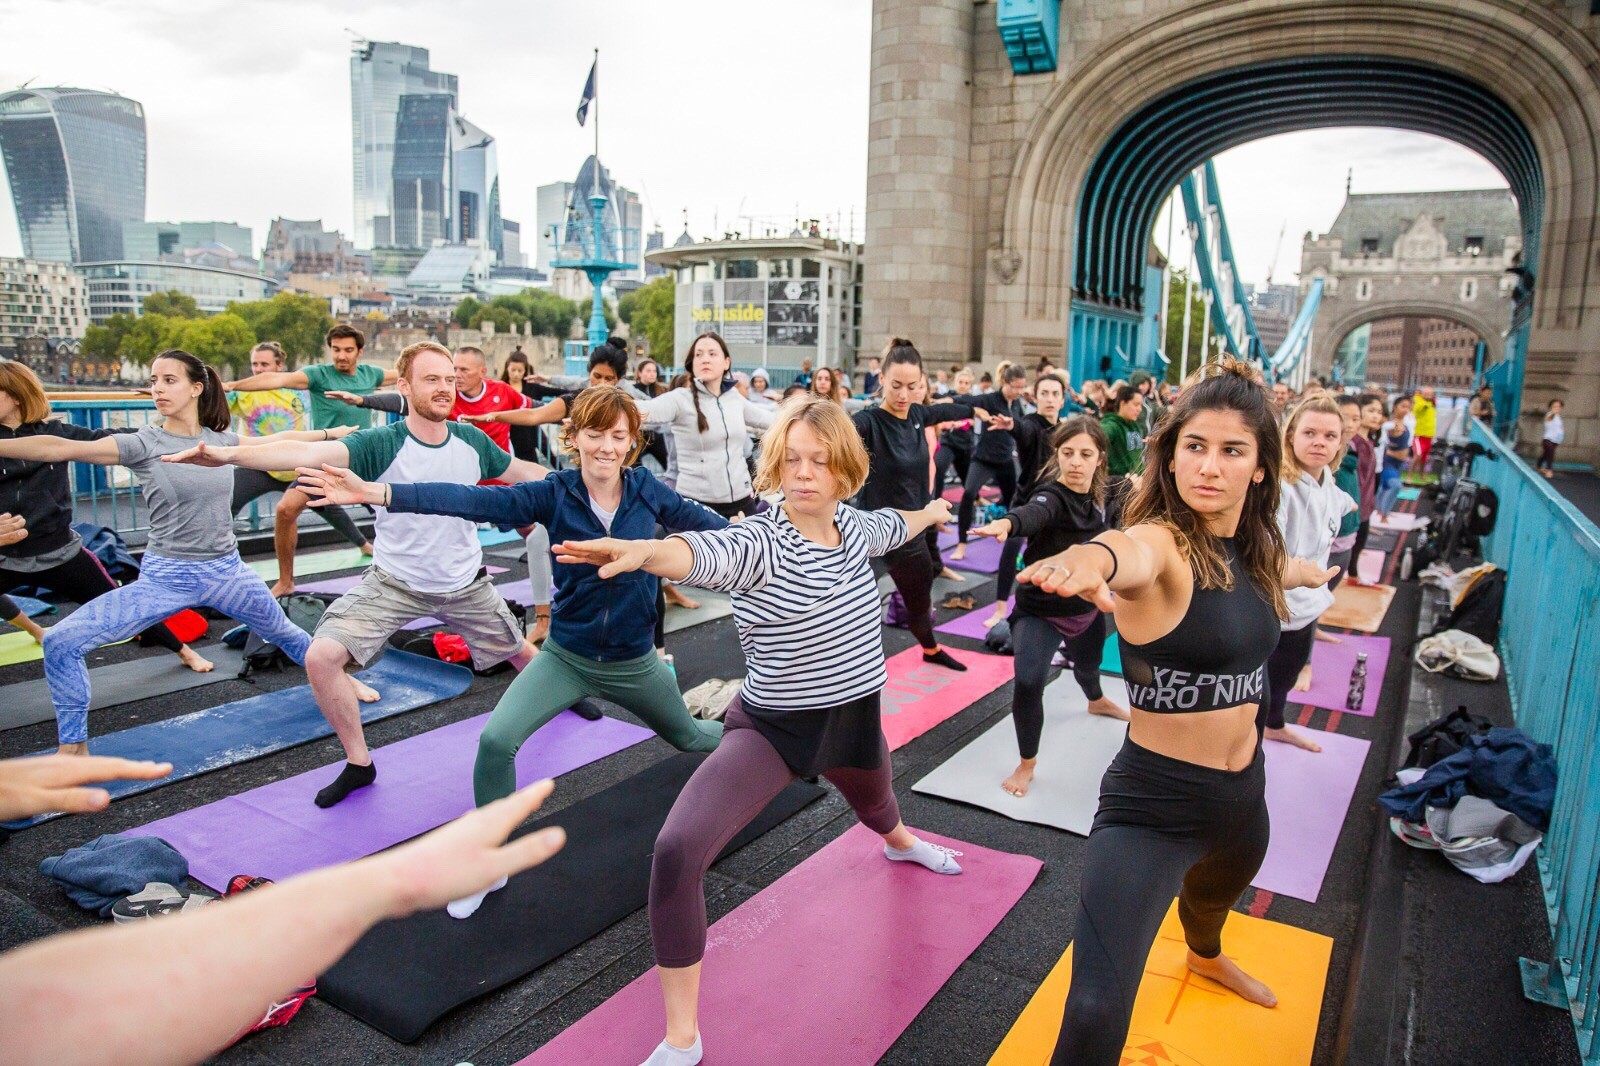 Reimagine Sunrise Flow yoga takes place on Tower Bridge, kicking off Car Free Day on Sunday 22 September